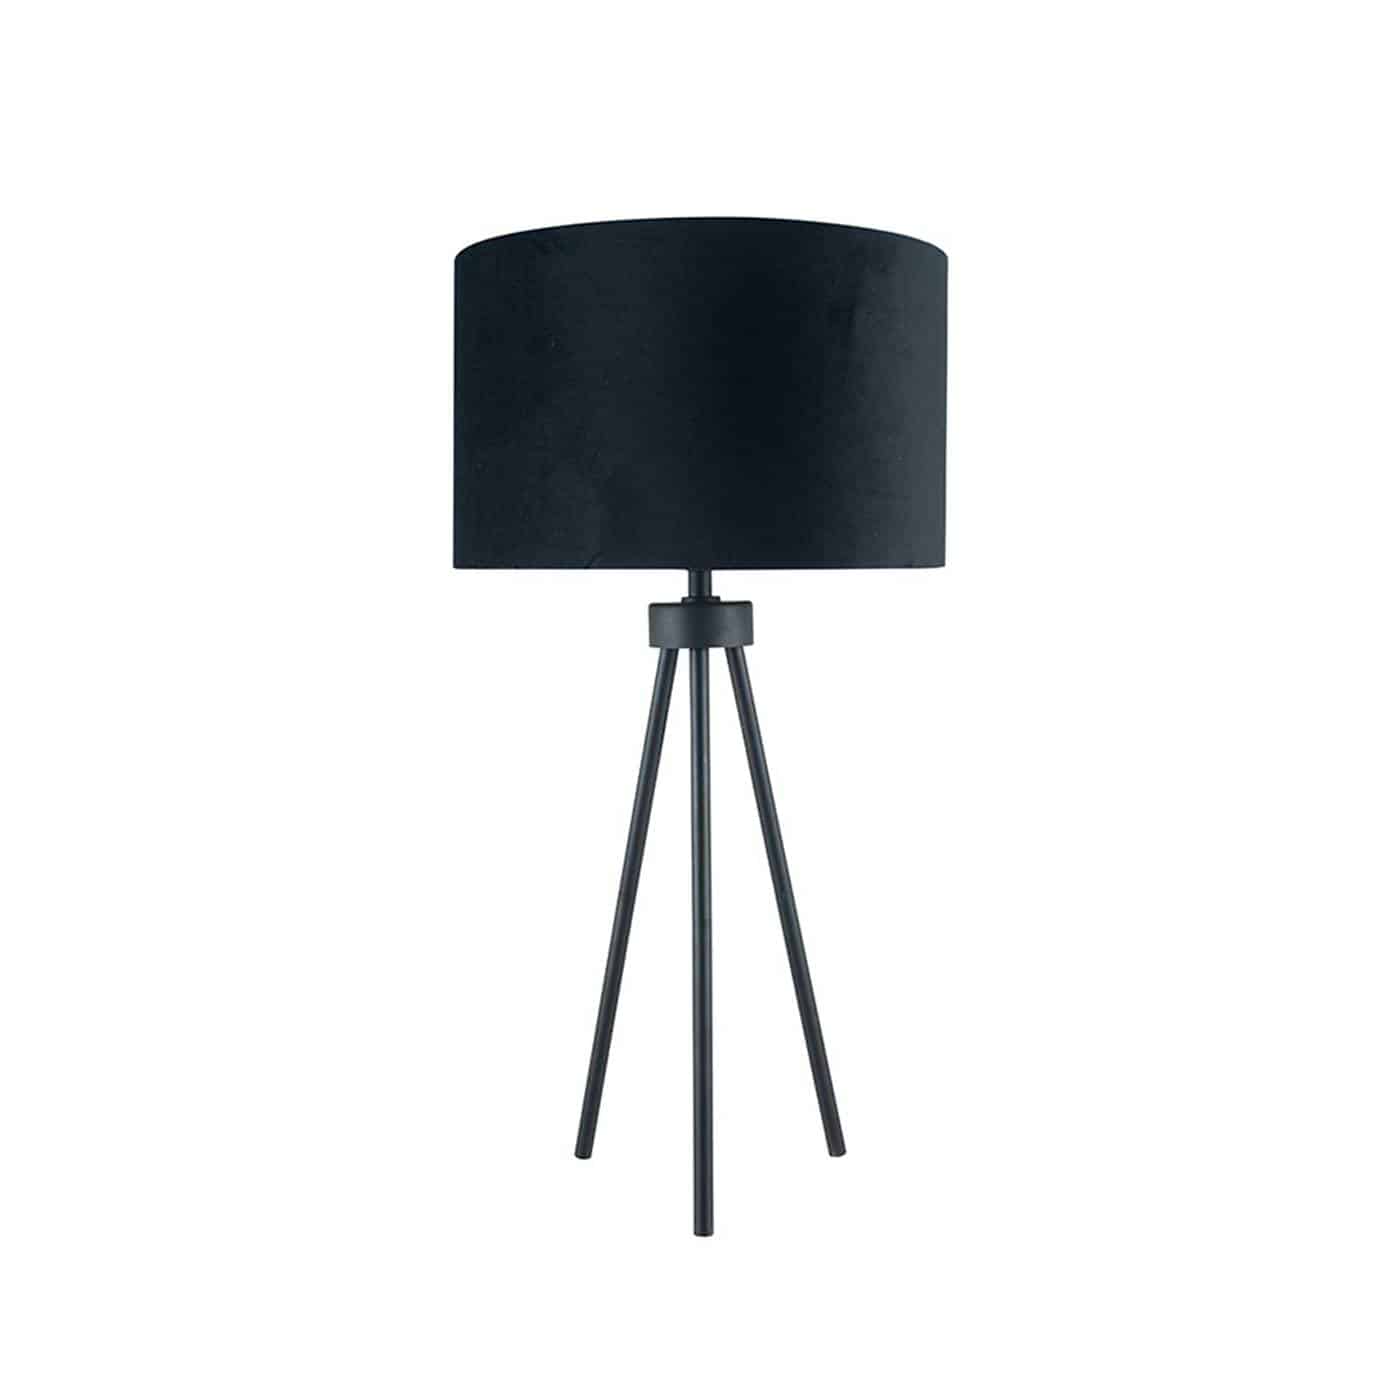 Tripod Table Lamp Lifestyle Furniture, Black And Grey Tripod Table Lamp